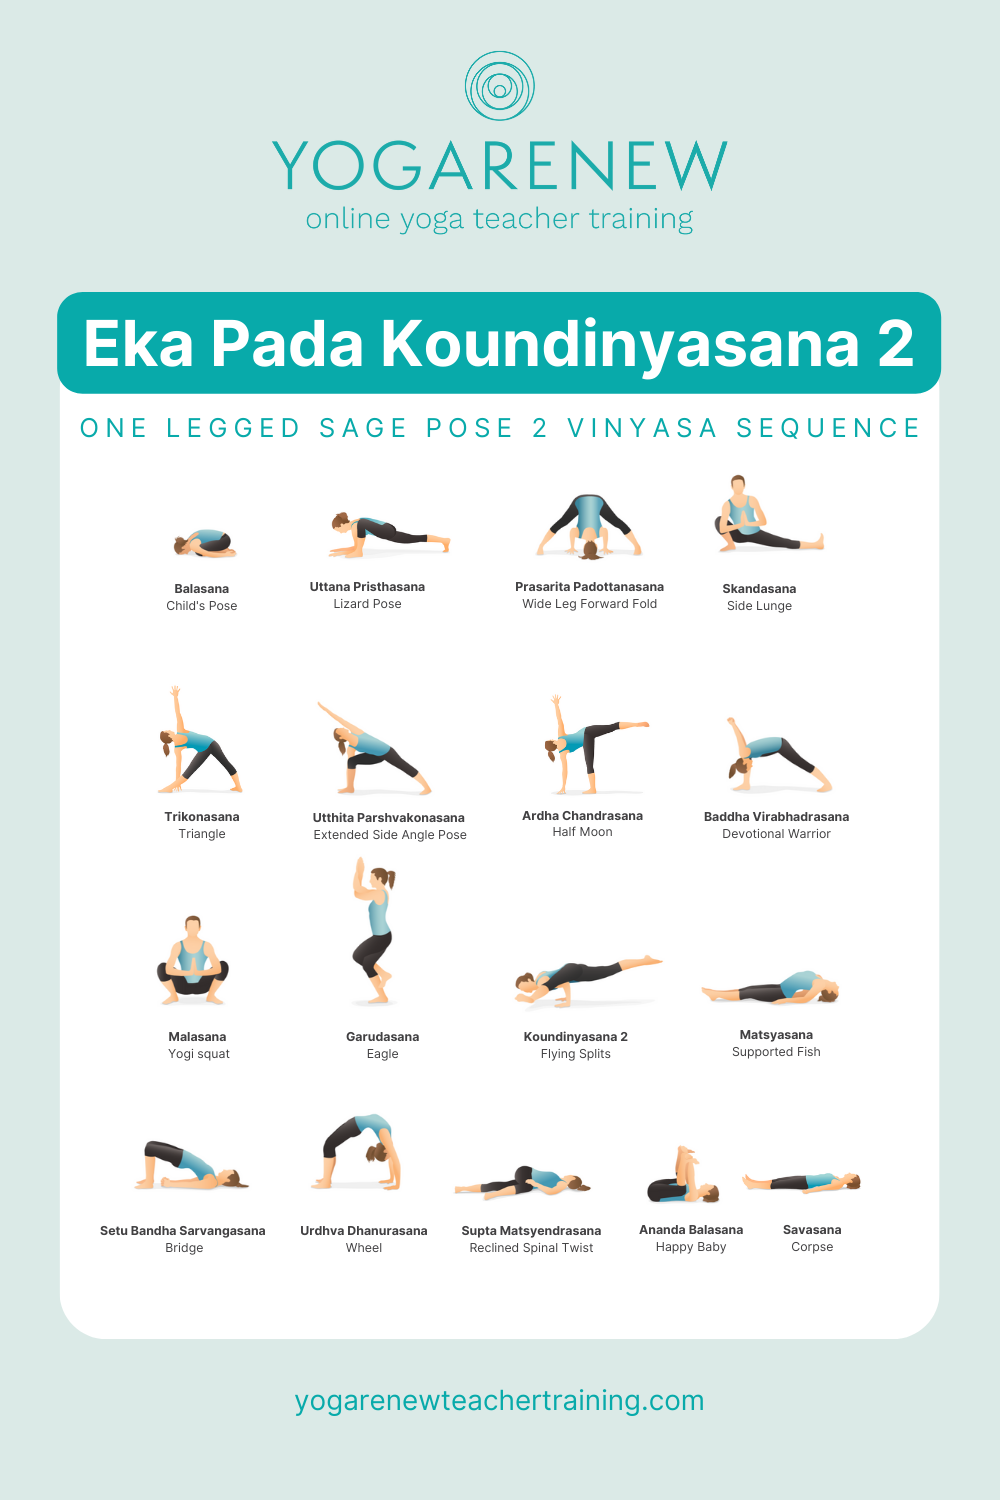 Eka Pada Koundinyasana 2 Guide Sheet with step by step instructions